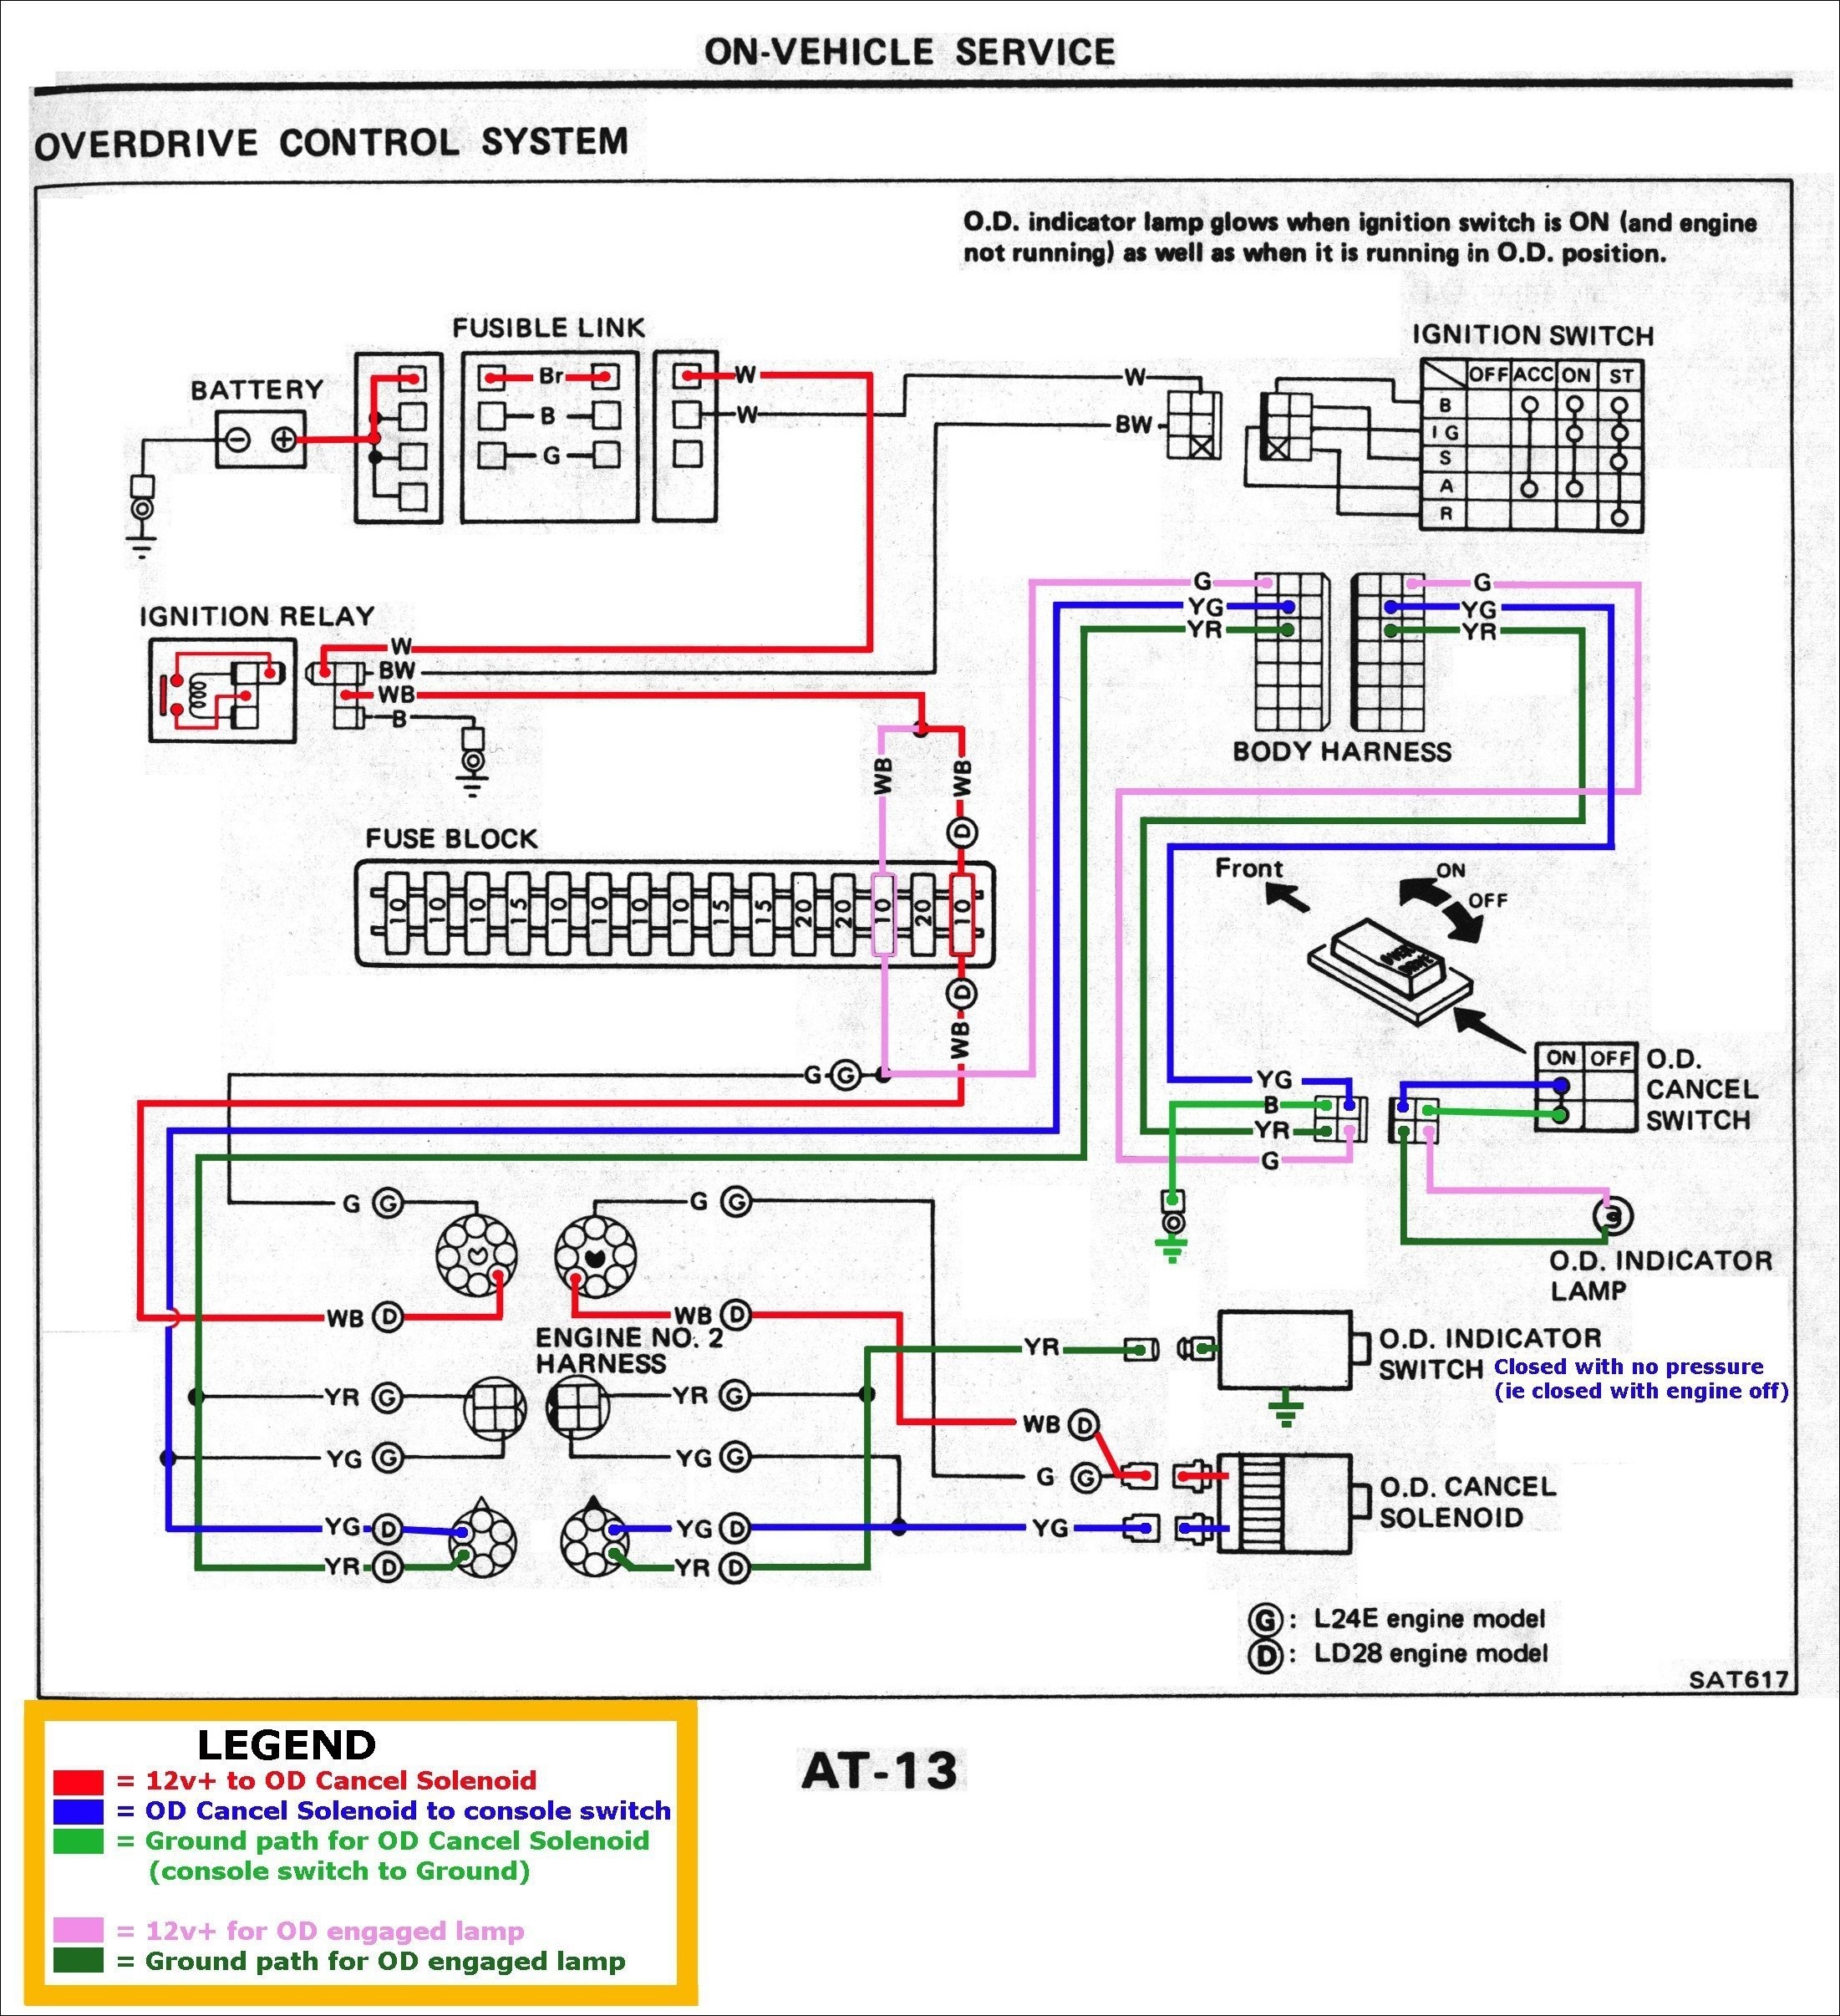 2003 Honda Crv Eld Wiring Wiring Diagram Pdf 2003 Honda Cr V Engine Wiring Diagram Of 2003 Honda Crv Eld Wiring